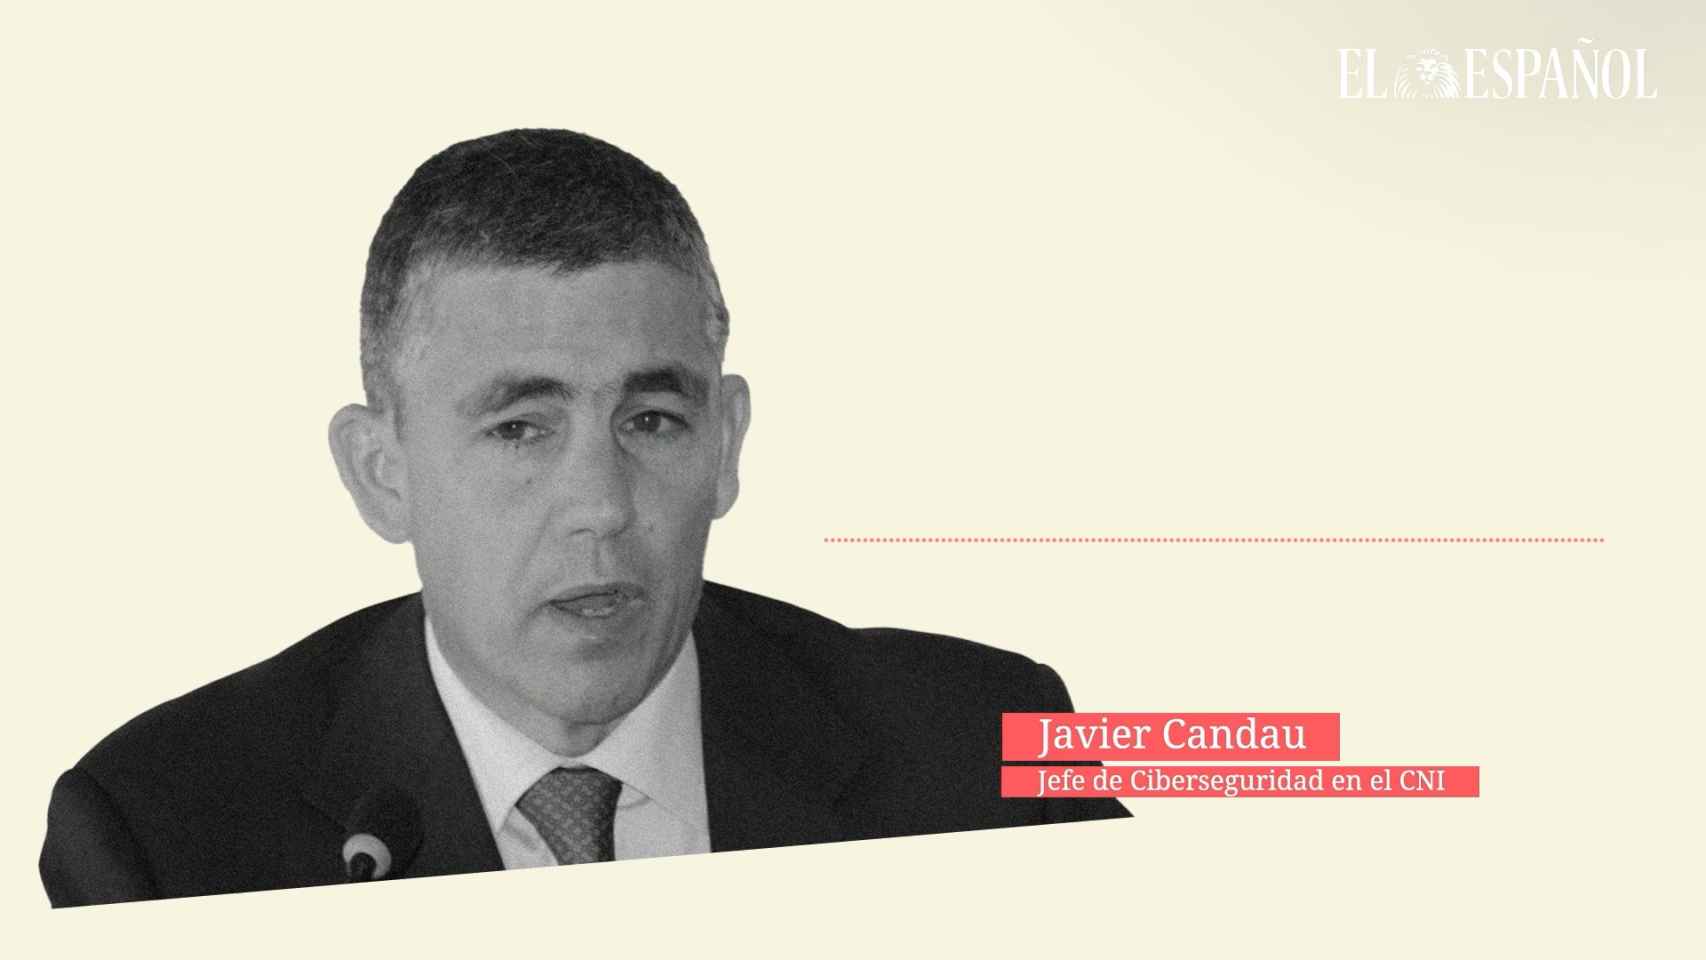 Javier Candau, Jefe de Ciberseguridad en el CNI (I)